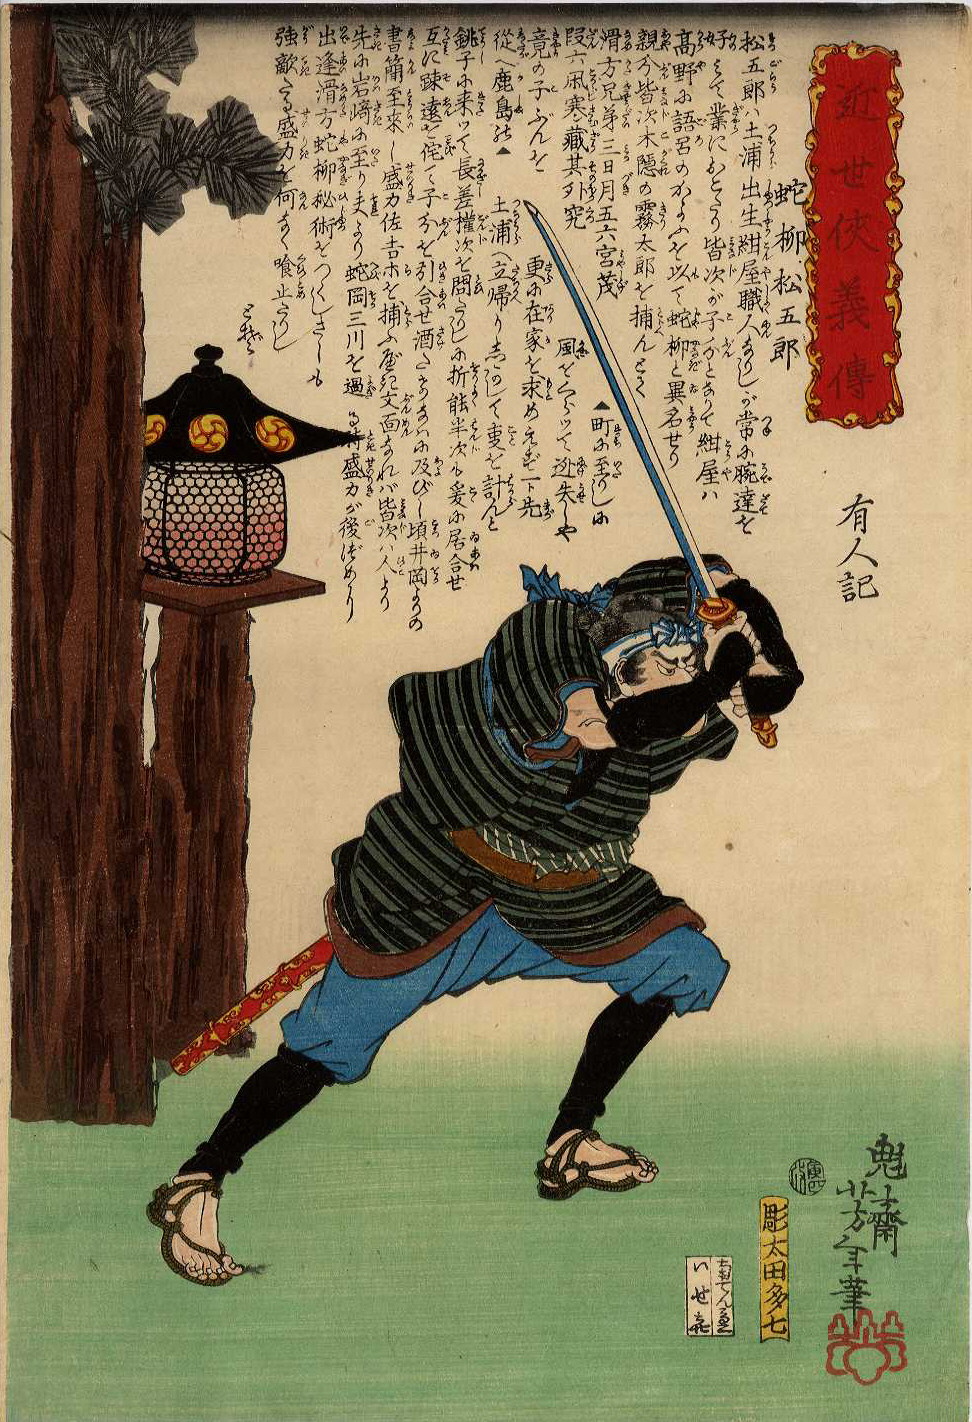 Yoshitoshi - Jayanagi Matsugorō with sword raised, beside a tree - Biographies of Modern Men